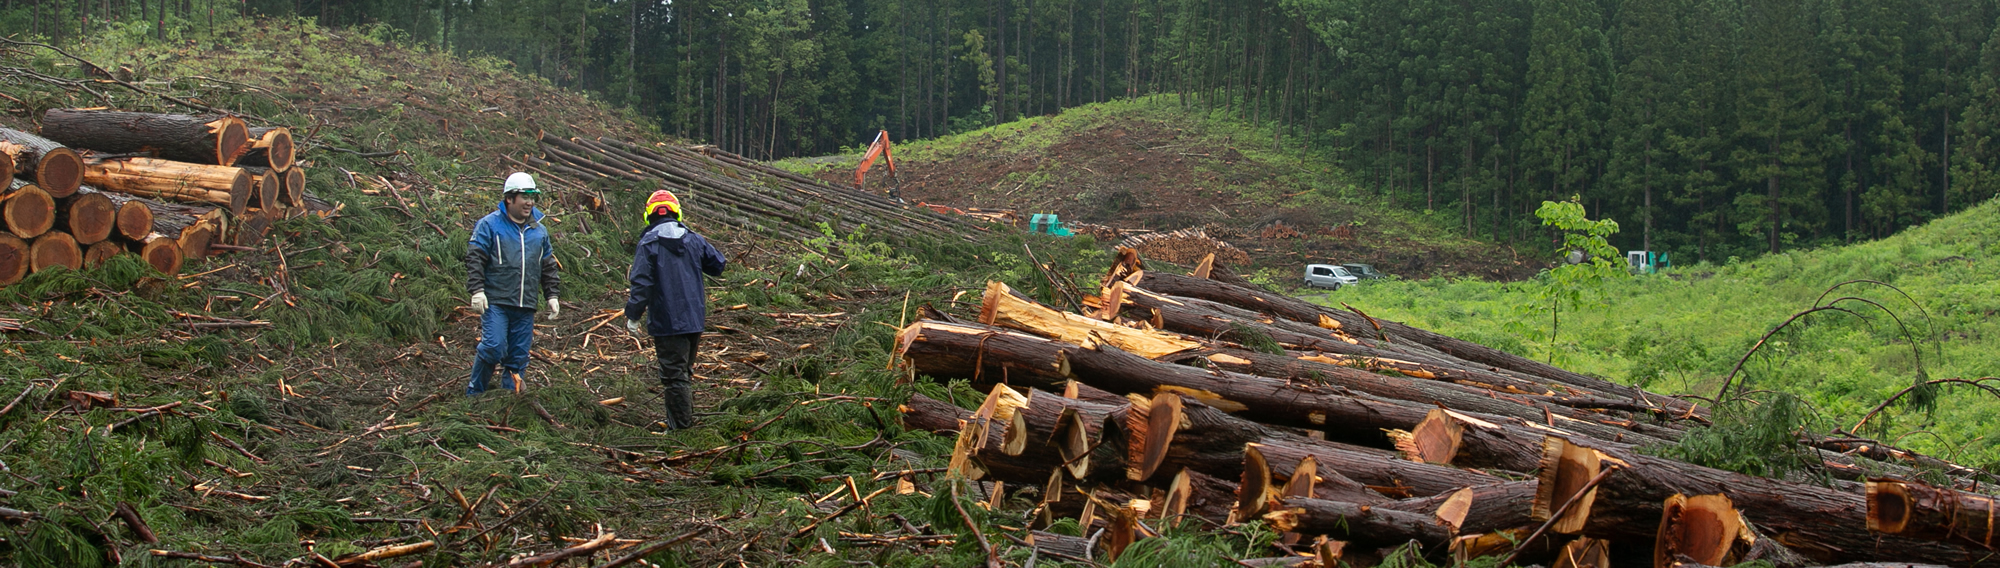 先輩の声 #1 – 東北ウッドカッター株式会社 | 山形県新庄市林業・木材産業